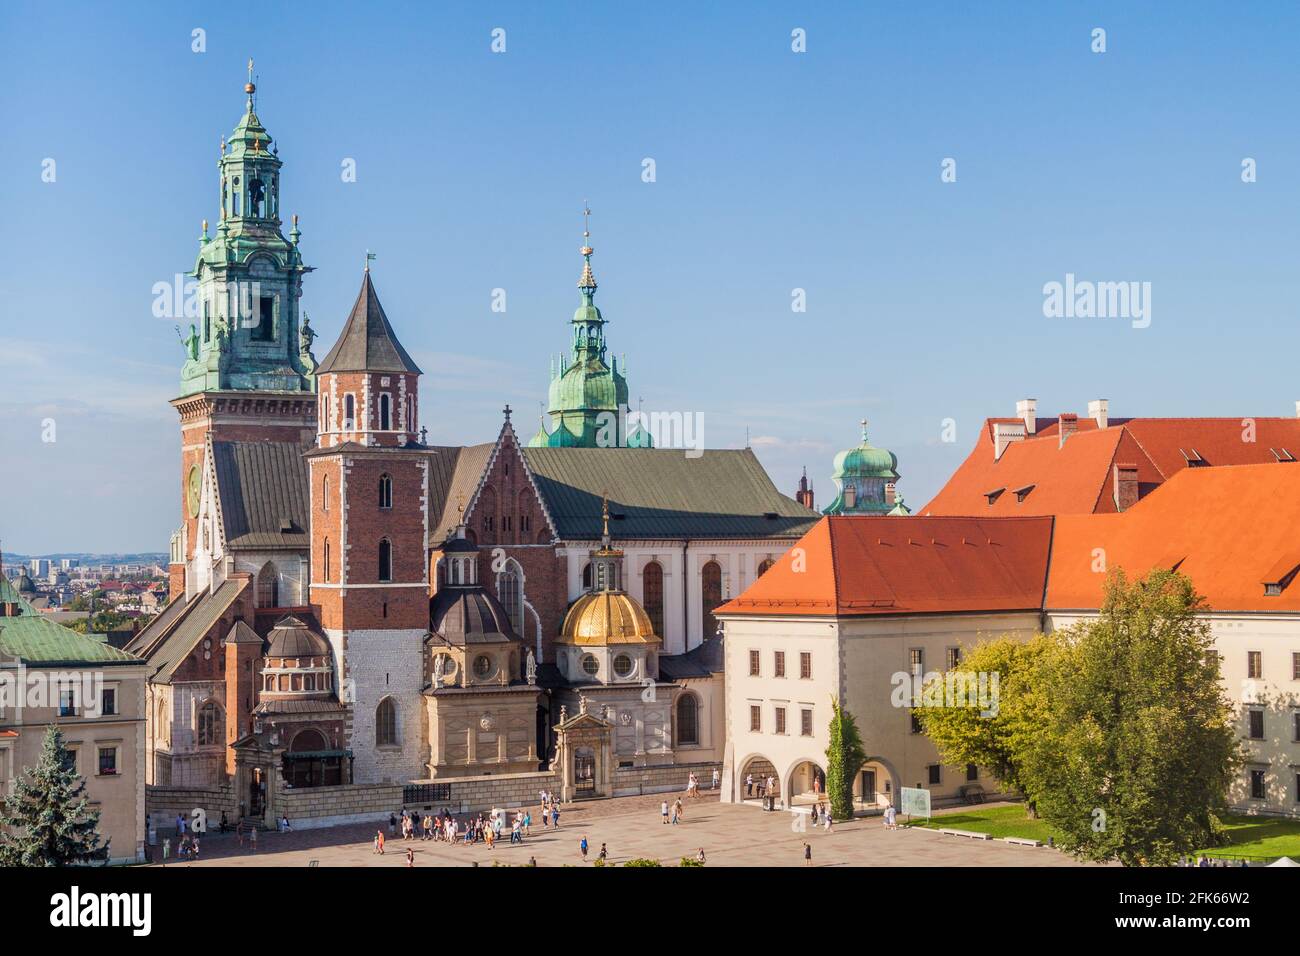 KRAKOW, POLAND - SEPTEMBER 4, 2016: Tourists visit Wawel castle in Krakow Poland Stock Photo